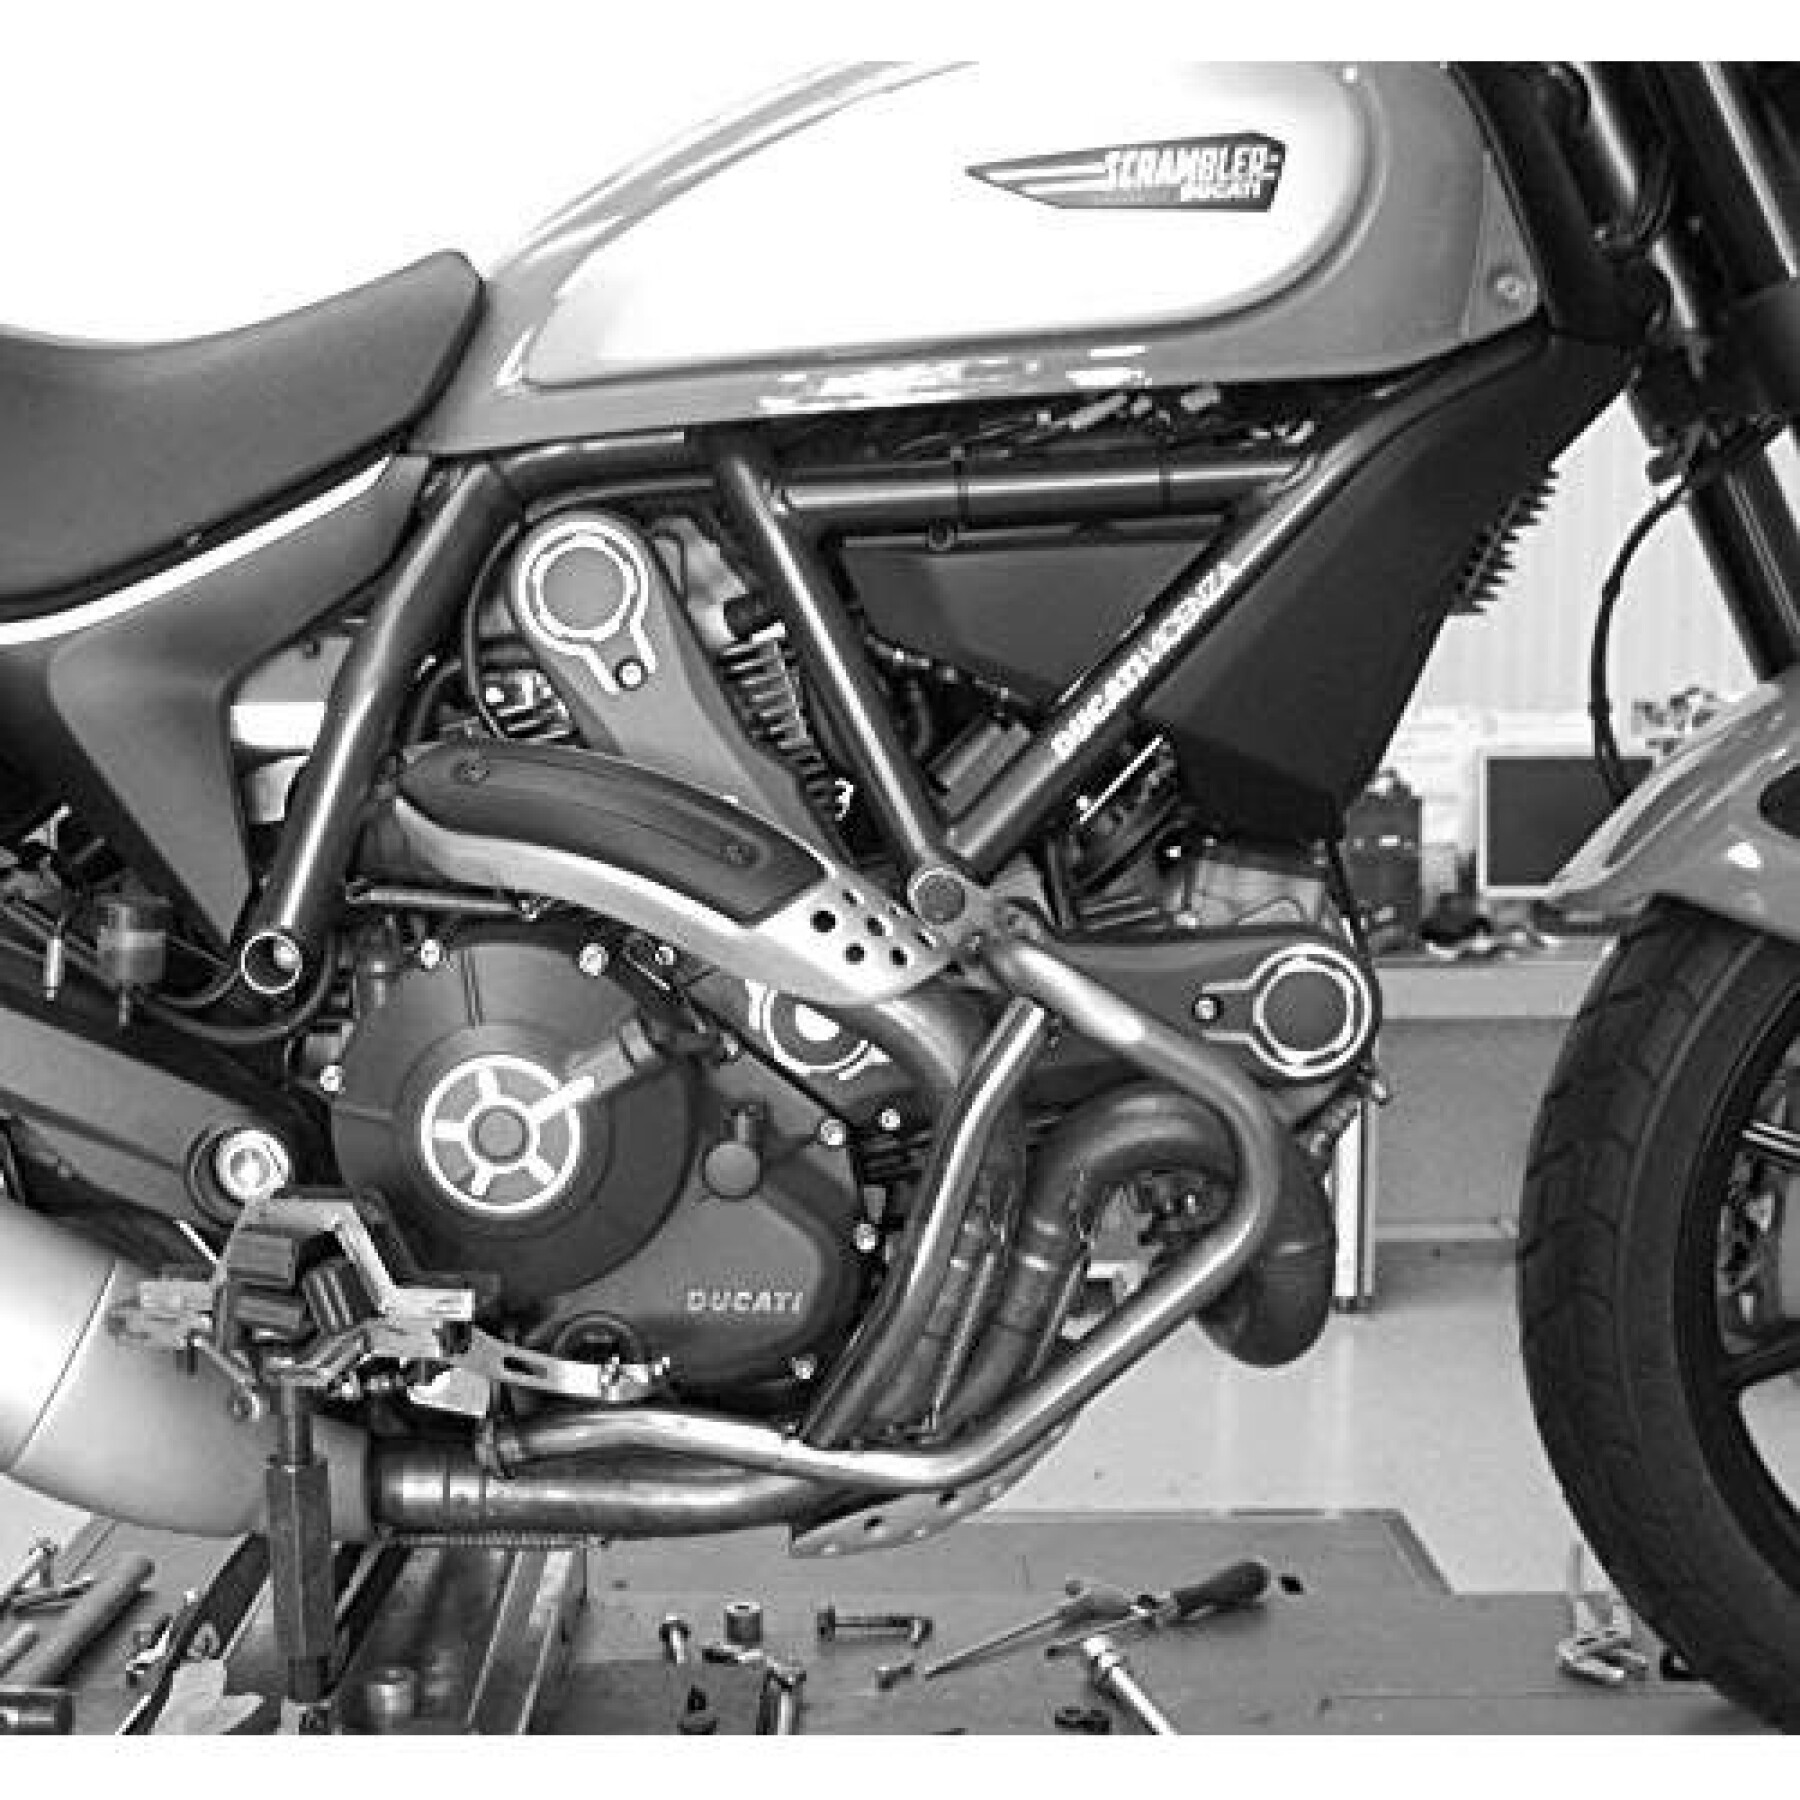 Protecciones para motos Givi Ducati Scrambler 800 (15 à 18)